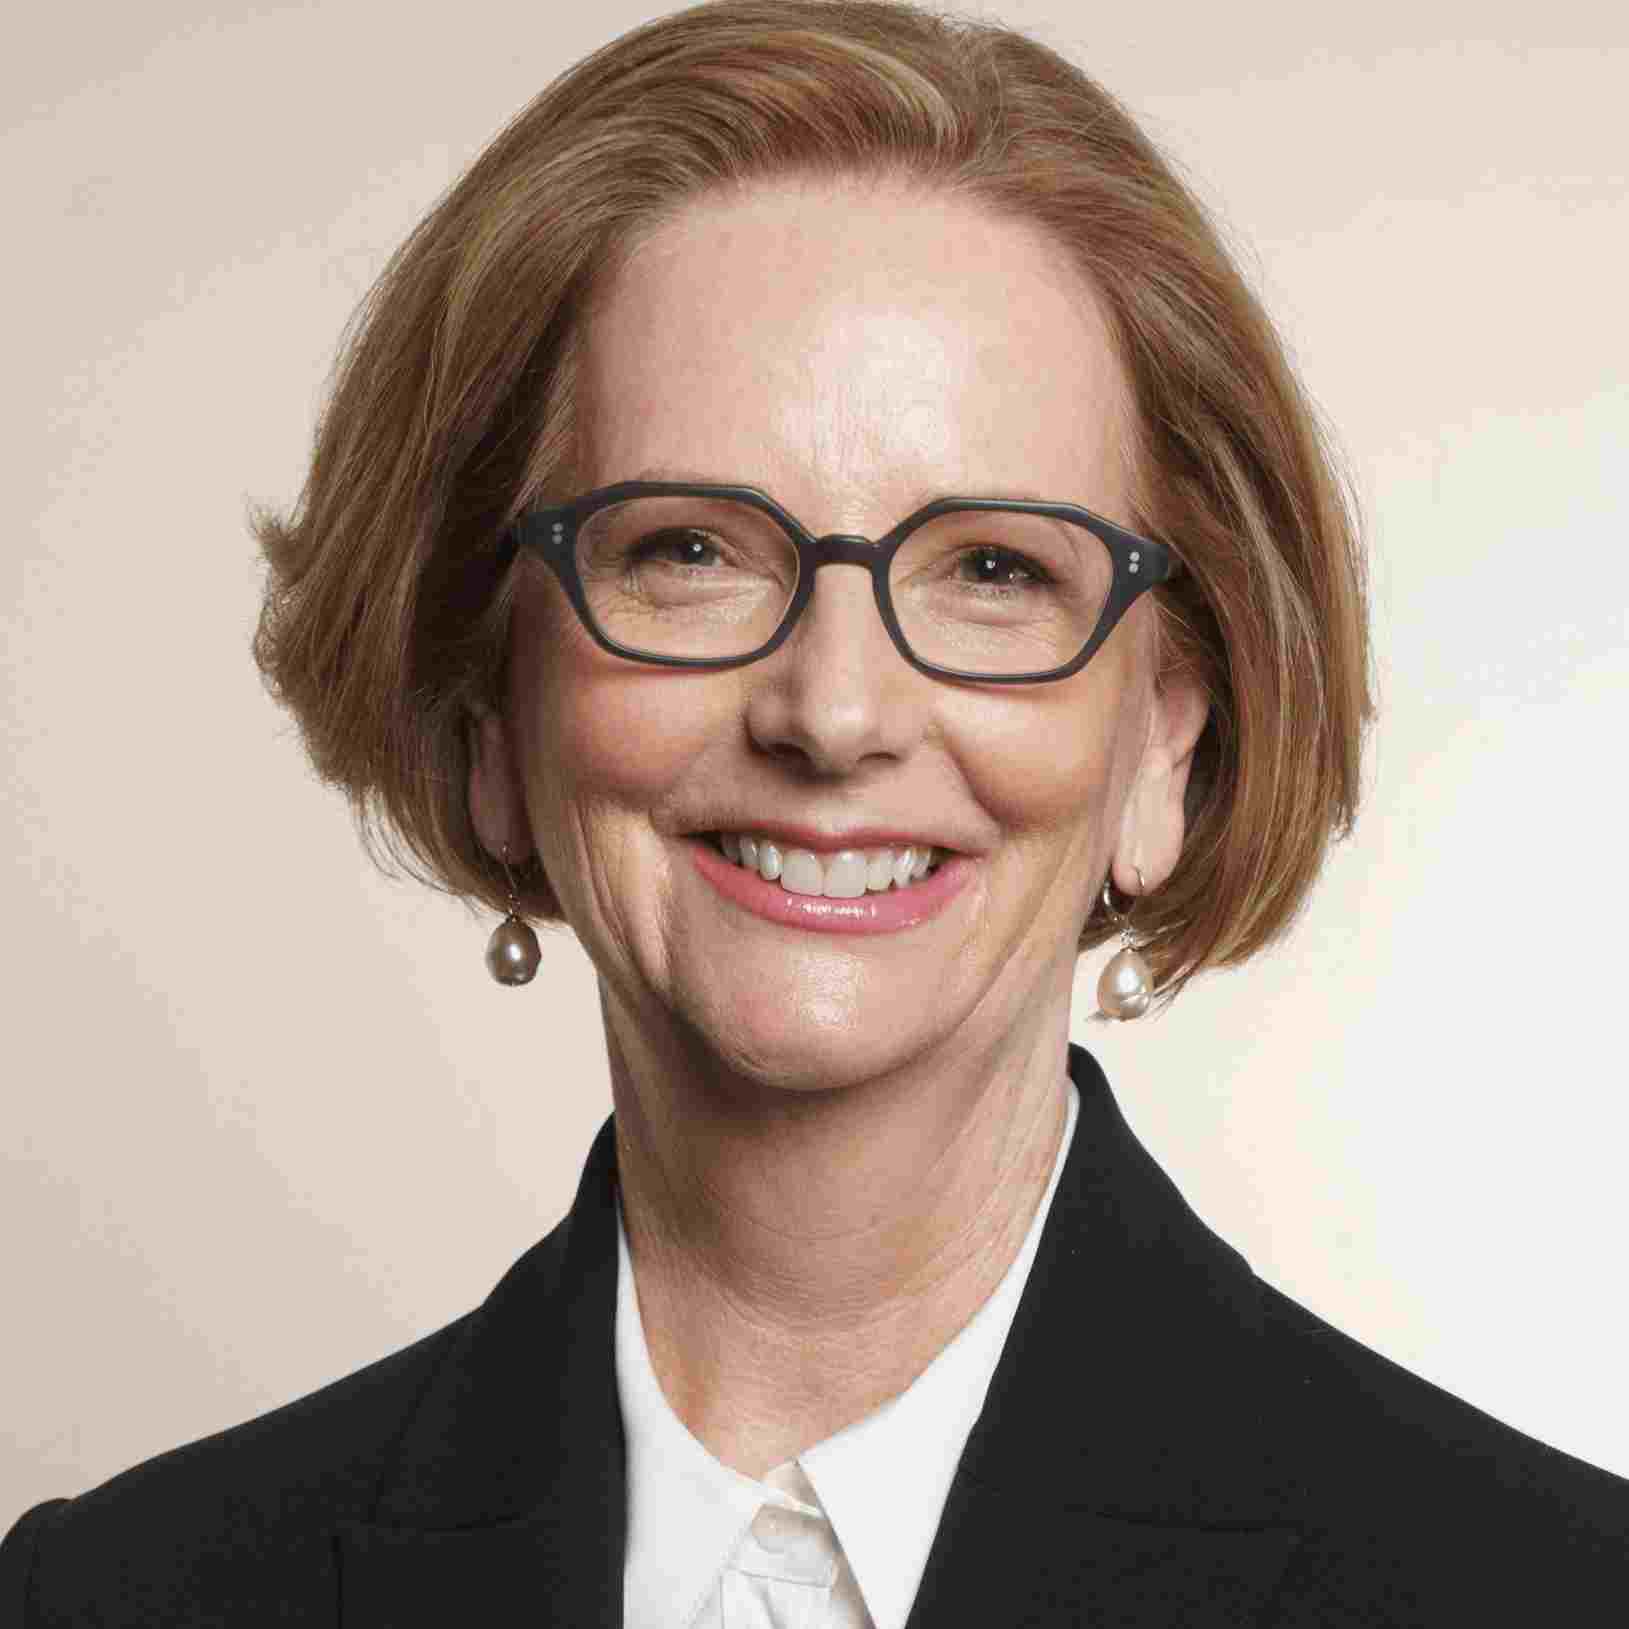 Julia Gillard Career